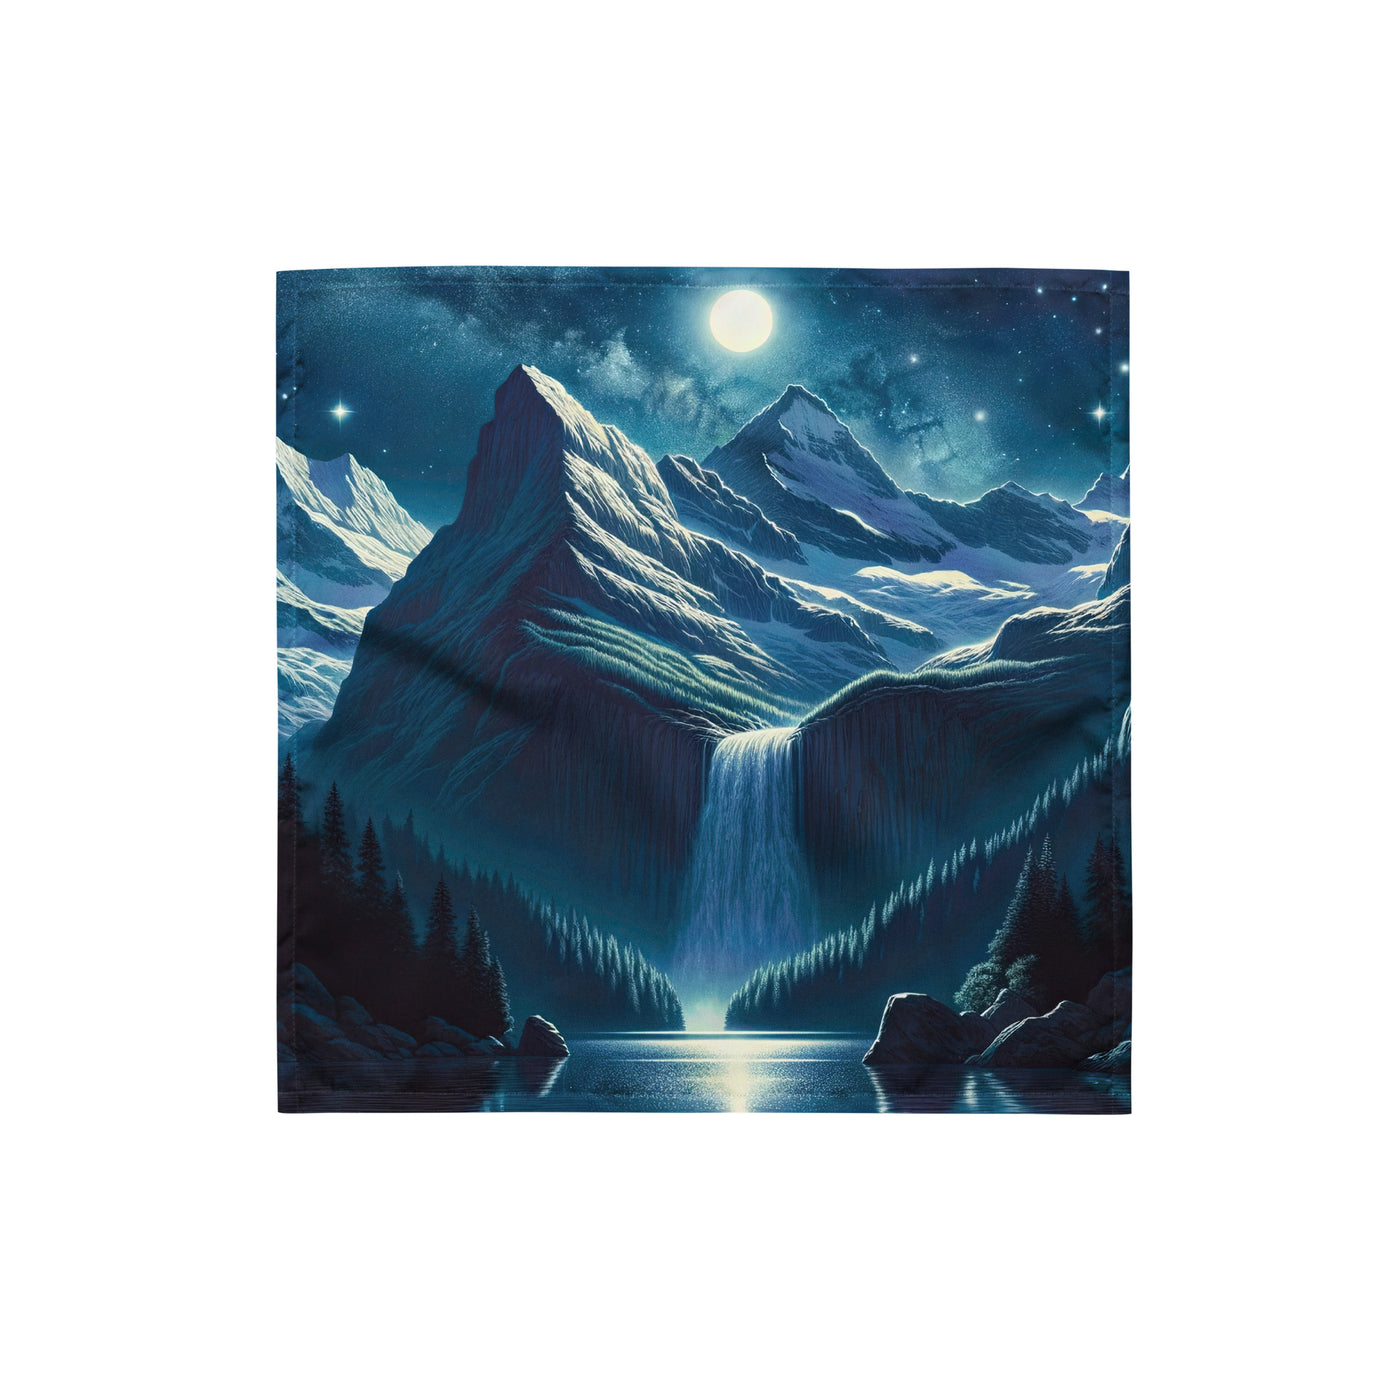 Legendäre Alpennacht, Mondlicht-Berge unter Sternenhimmel - Bandana (All-Over Print) berge xxx yyy zzz S